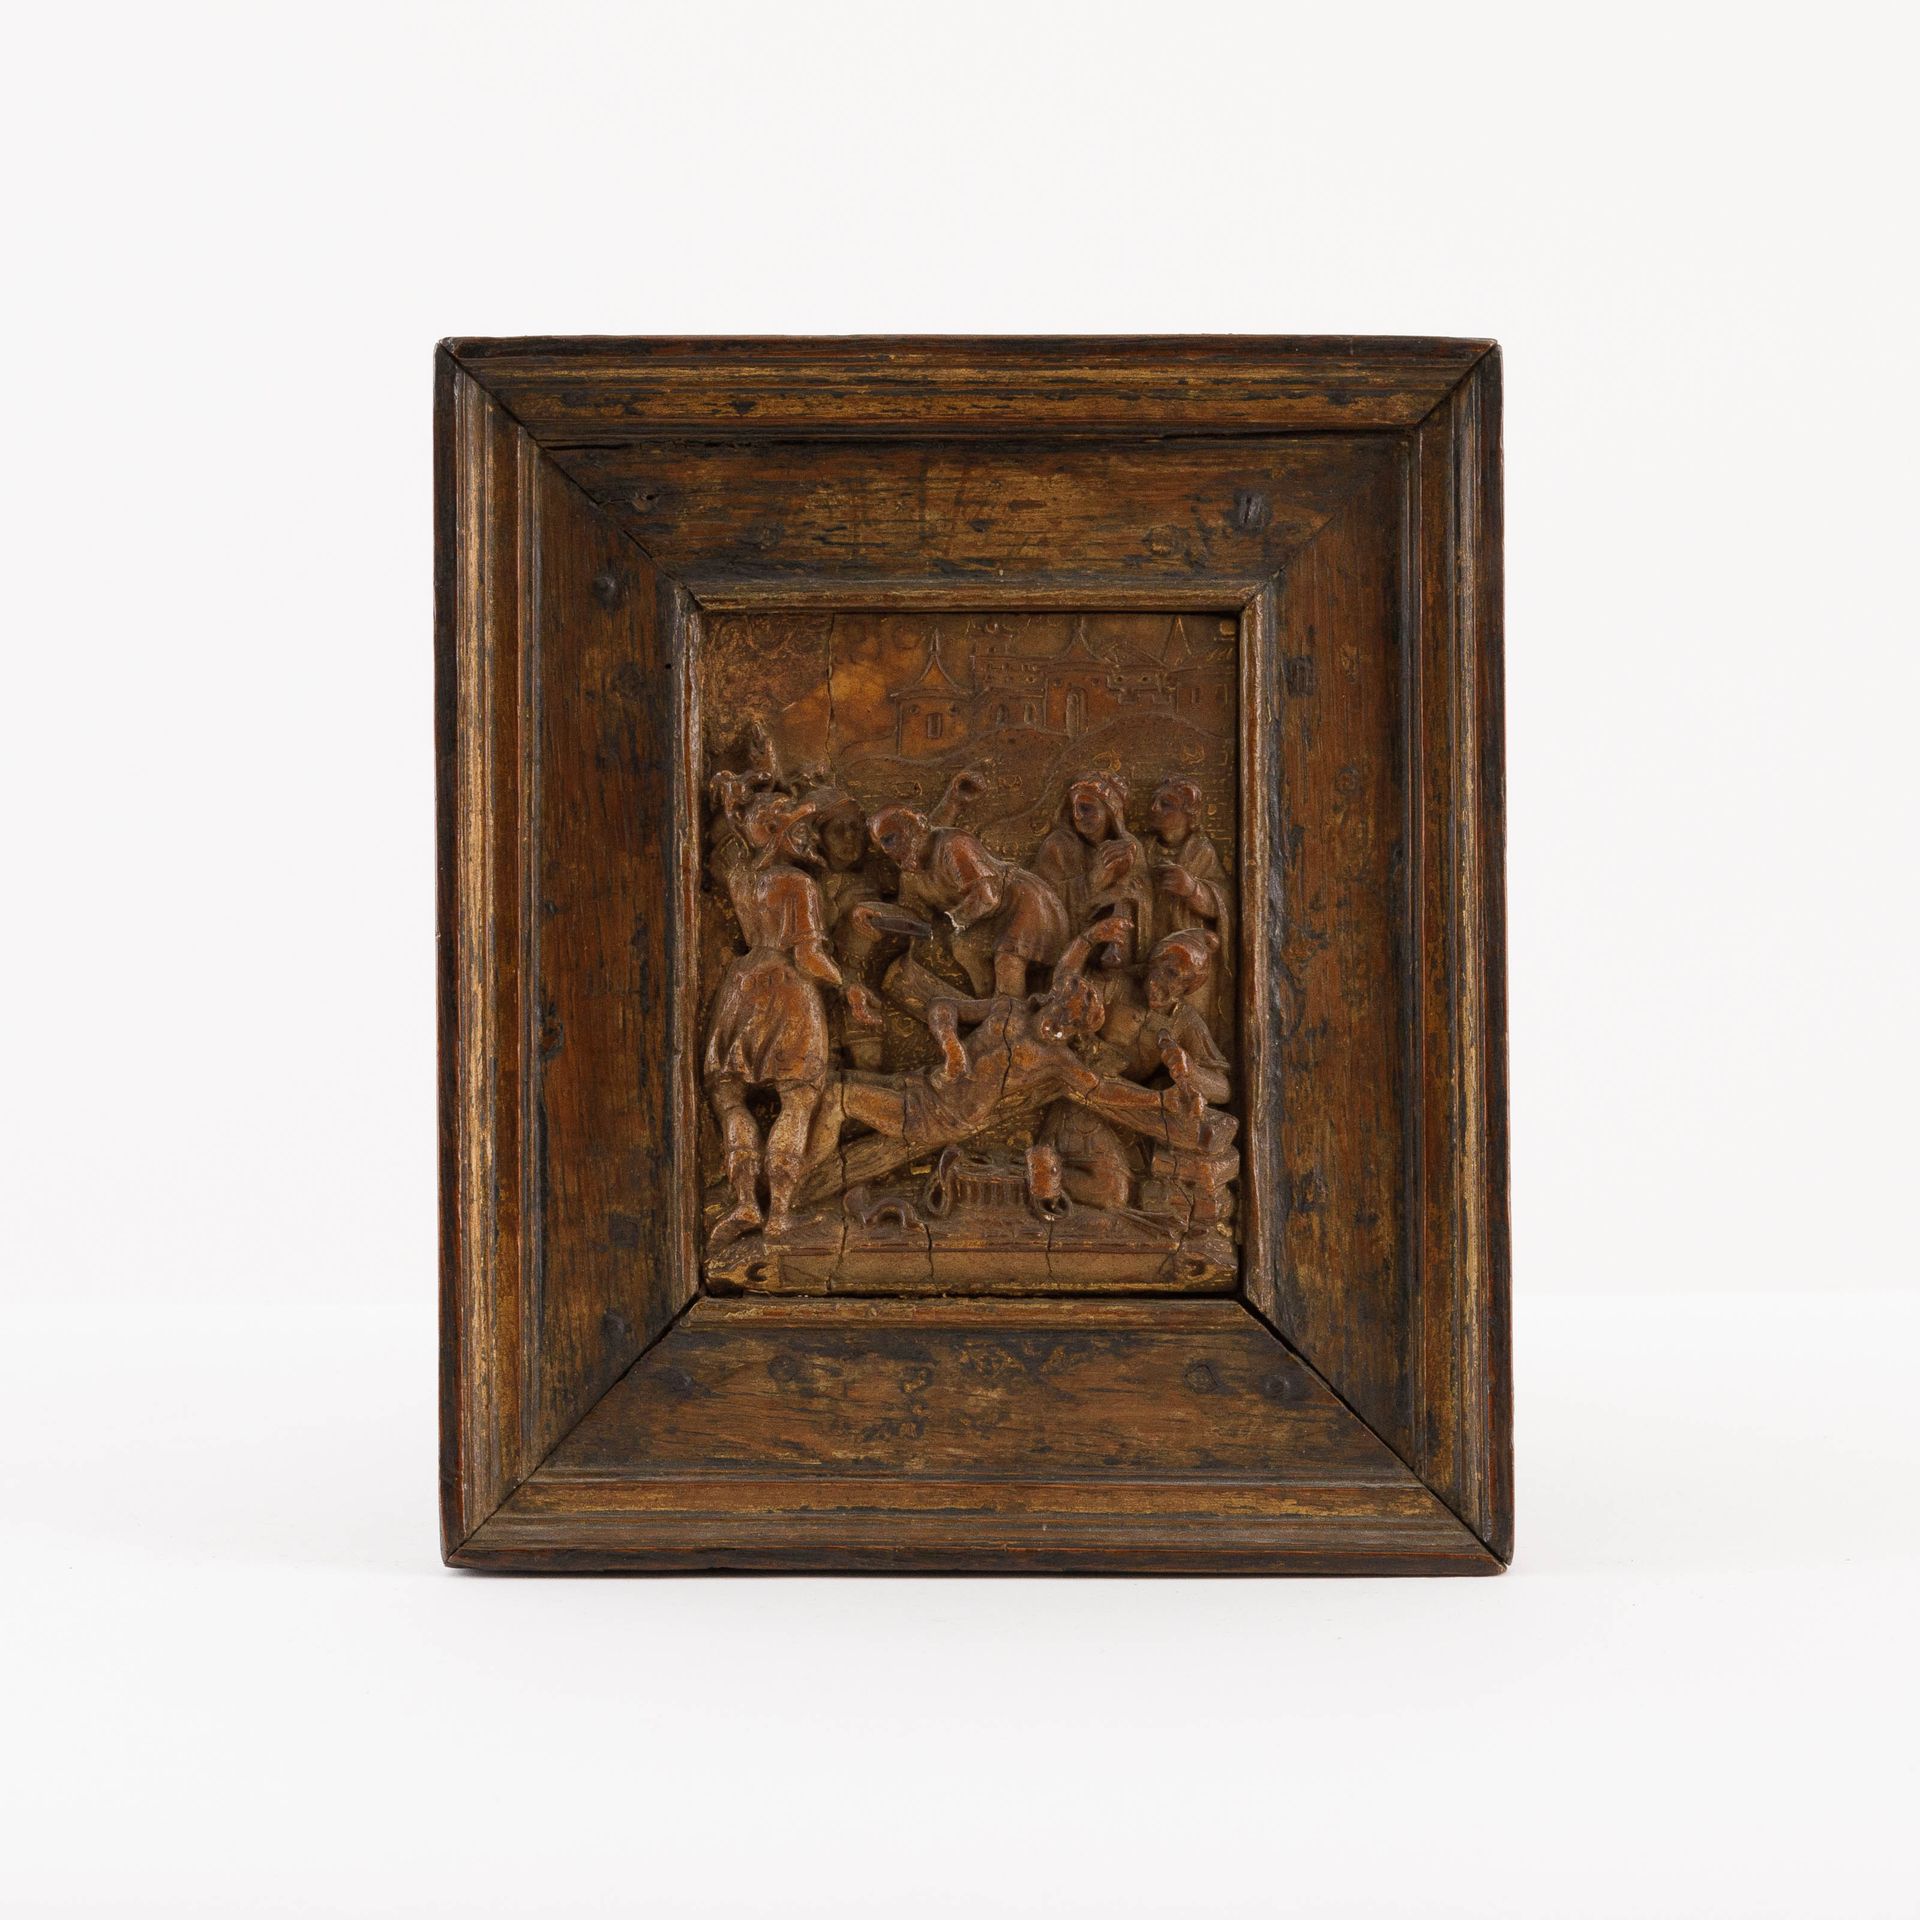 Relief. Malines. Ca. 1580. 救济。梅赫伦。约1580年。

阿拉巴斯特。

描绘的是举起十字架。

残存的镀金。

木制框架。轻微损坏&hellip;